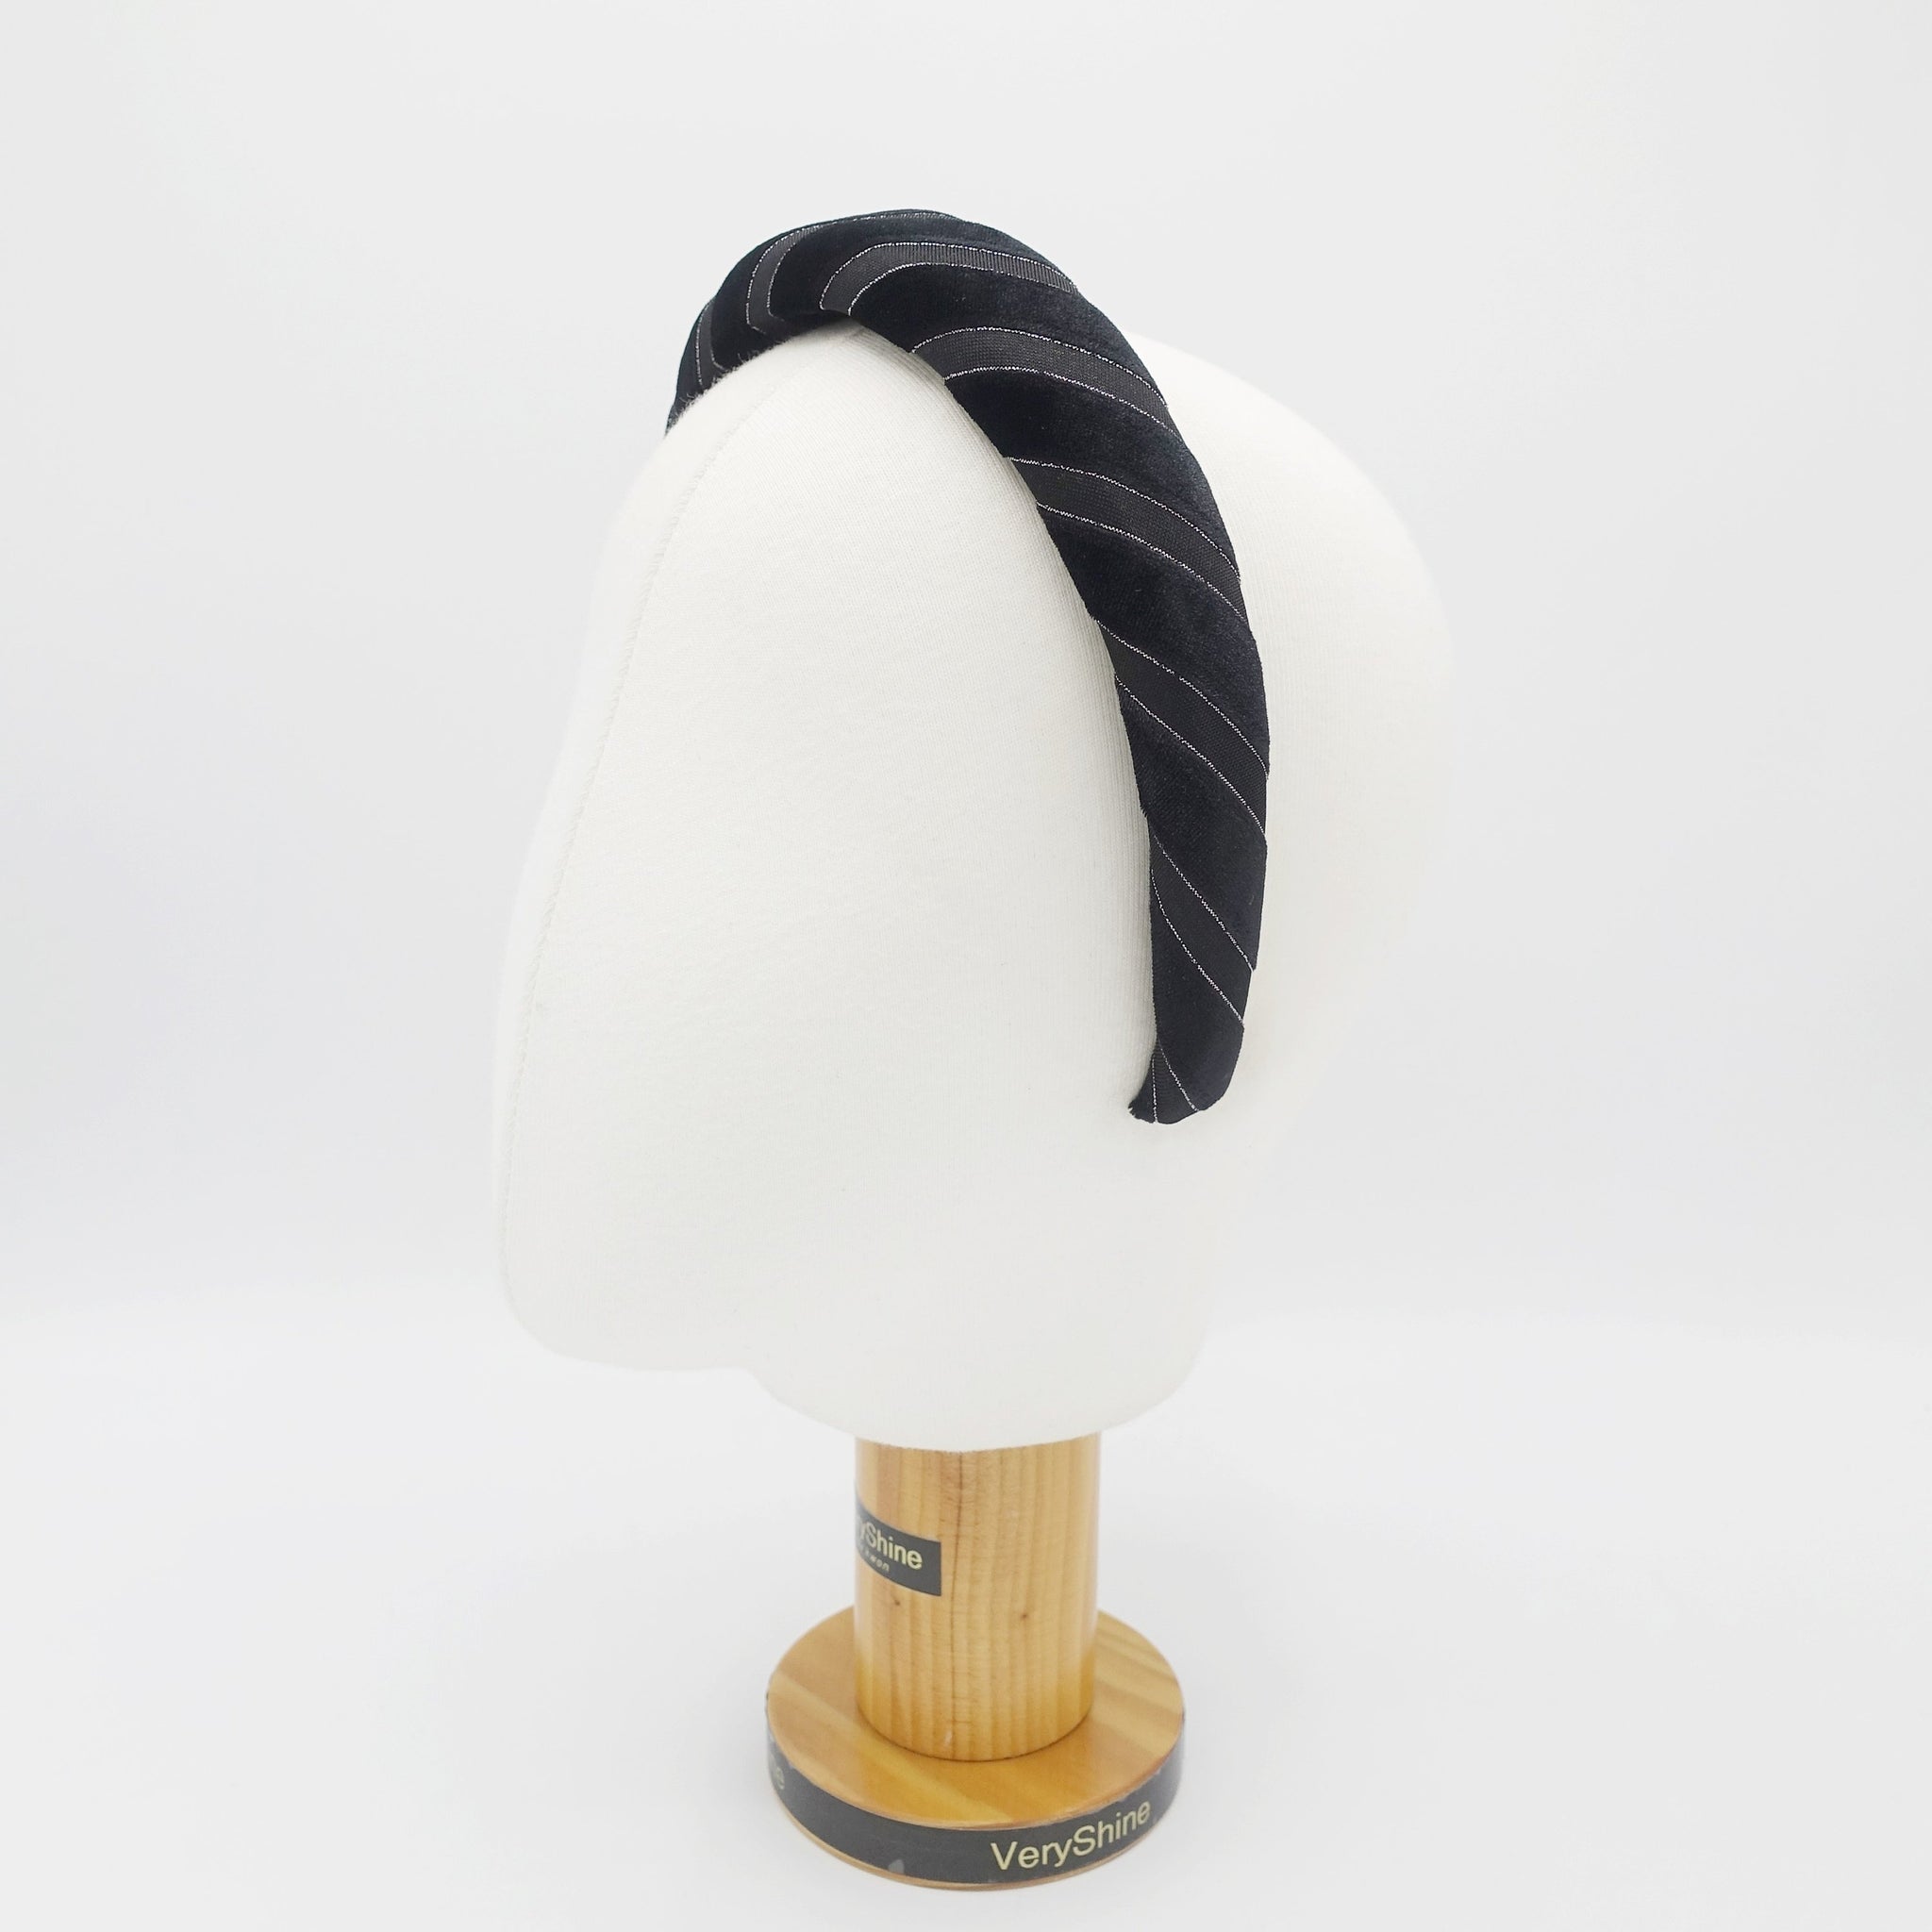 VeryShine velvet padded headband patterned stylish hairband shop for women